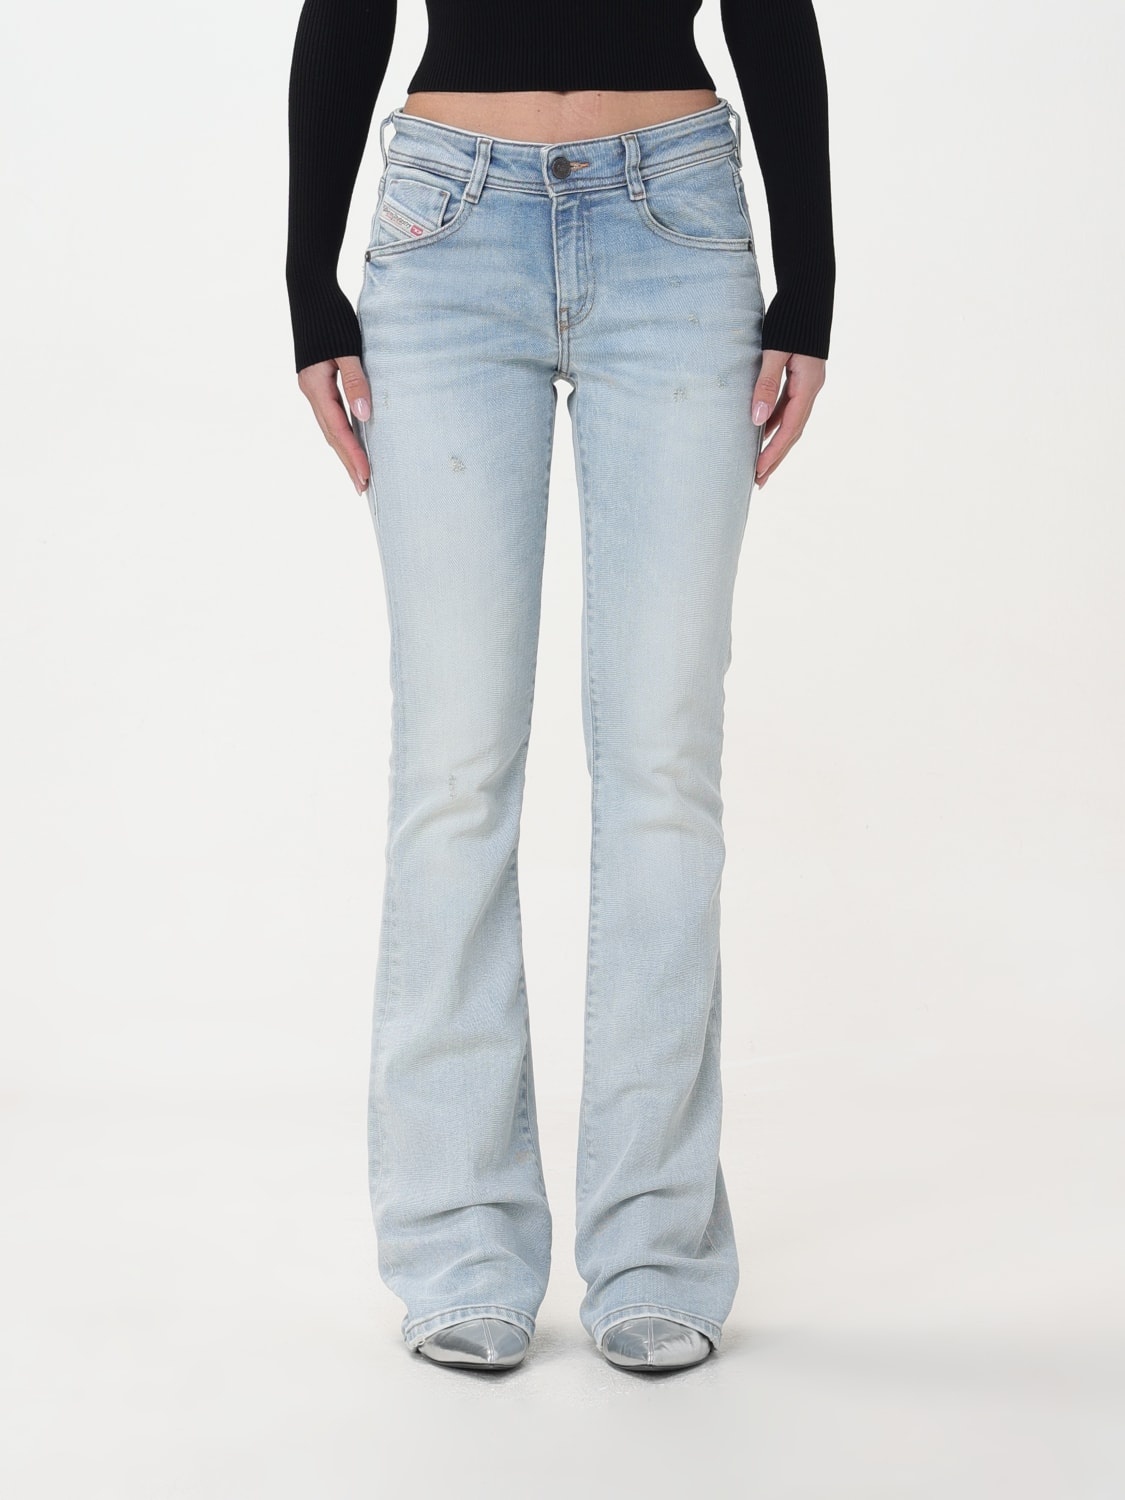 Jeans woman Diesel - 1